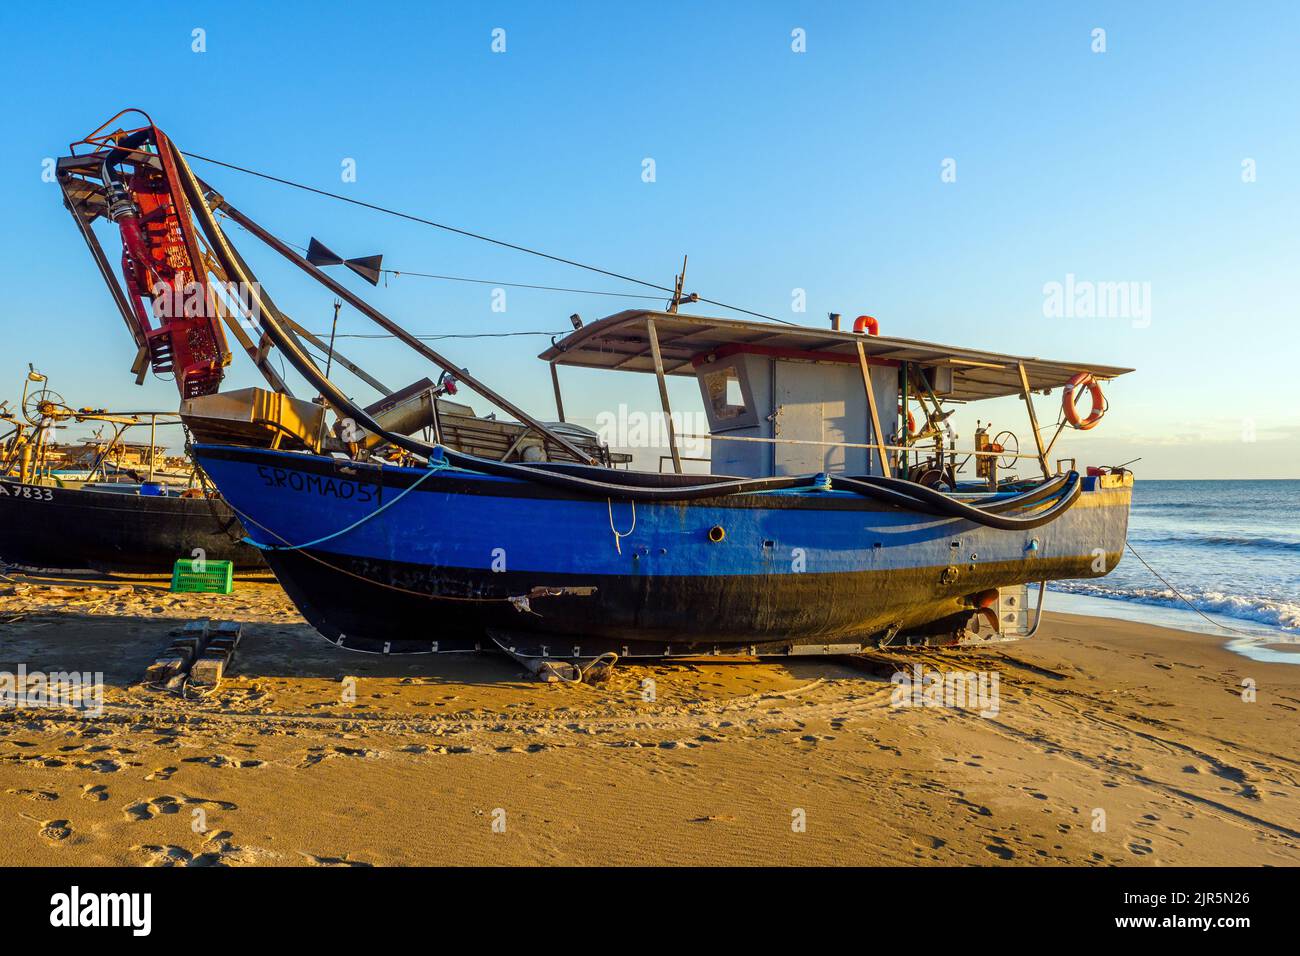 Barco de pesca en la playa de Torvaianica - Roma, Italia Foto de stock